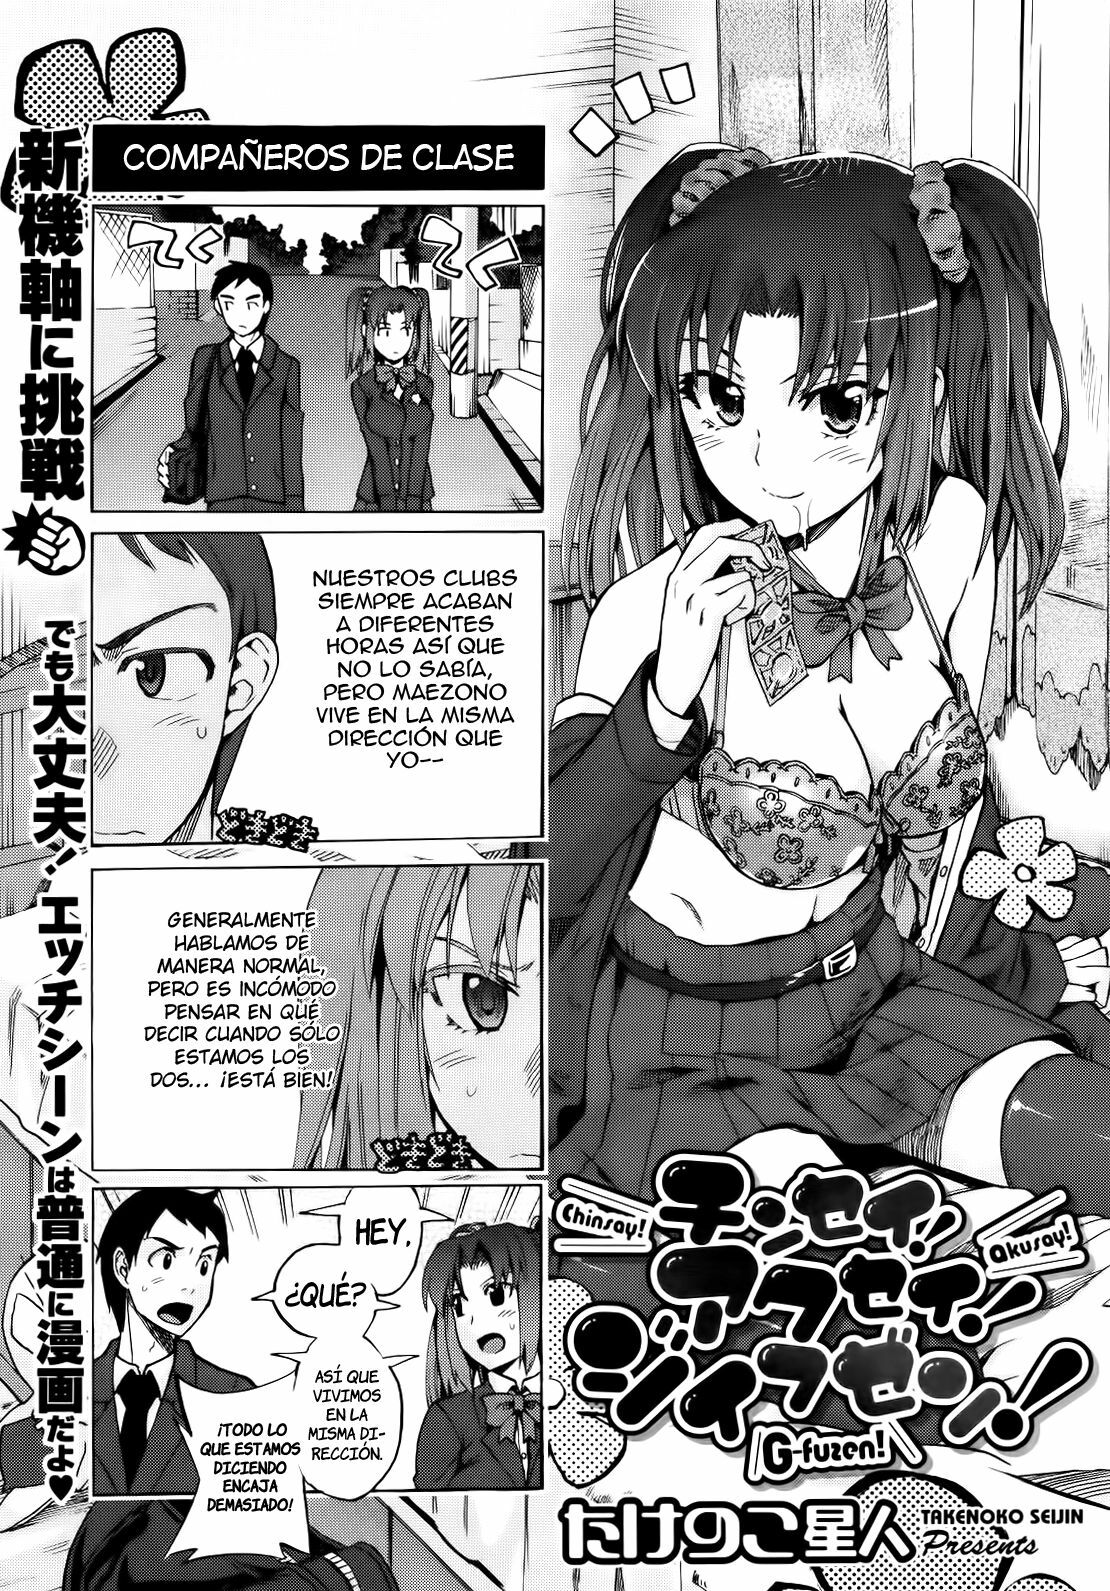 [Takenoko Seijin] ¡Chinsay! ¡Akusay! ¡G-Fuzen! [Español/Spanish][H-Elite no Fansub] page 1 full